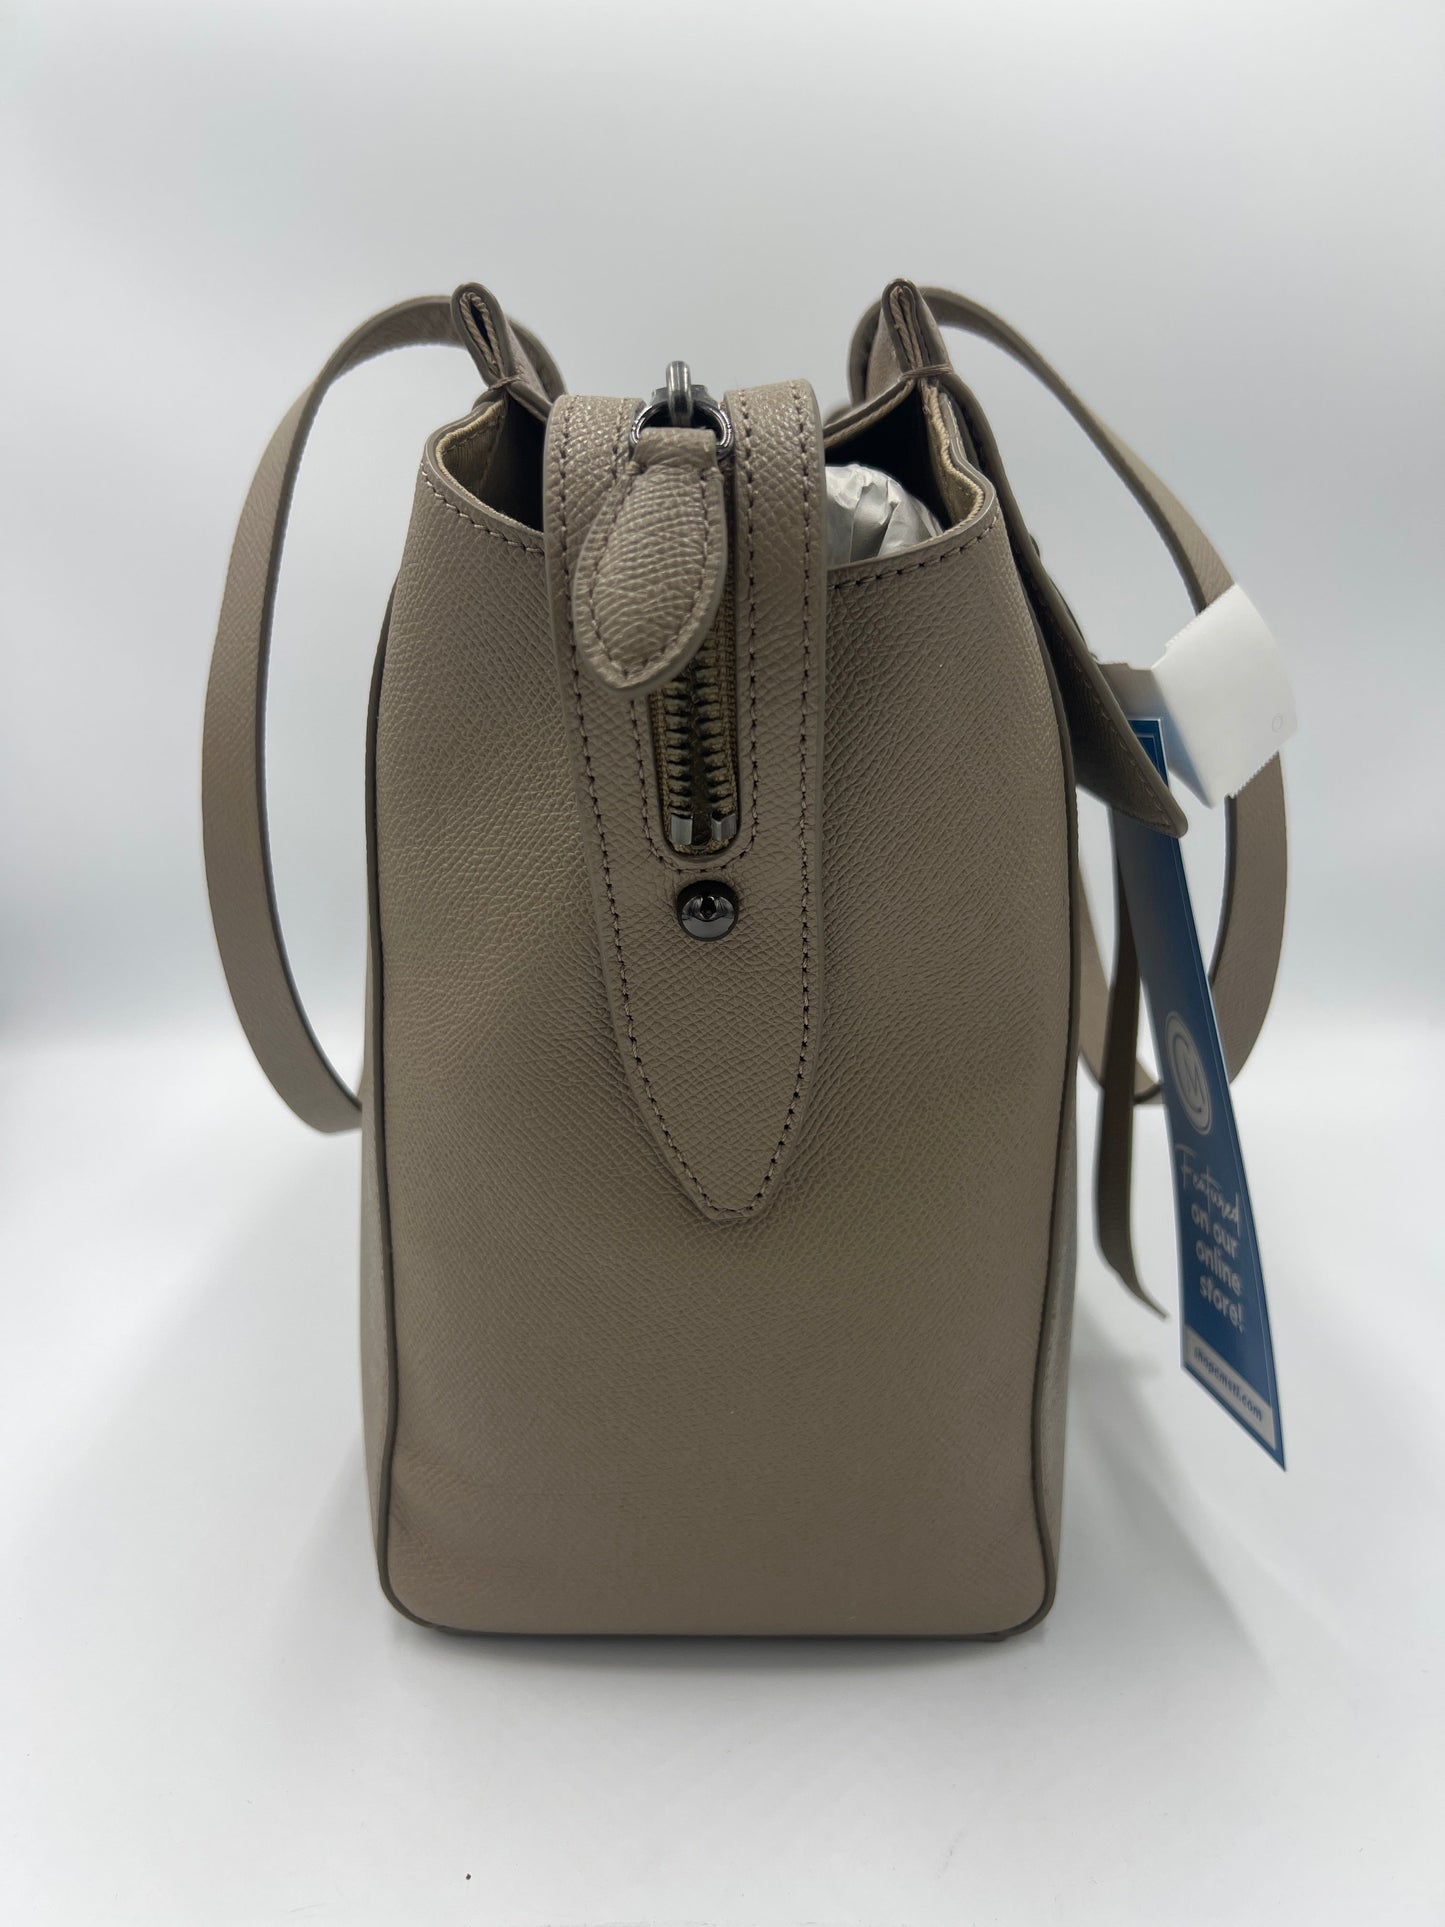 New! Handbag Designer By Rebecca Minkoff   Size: Large